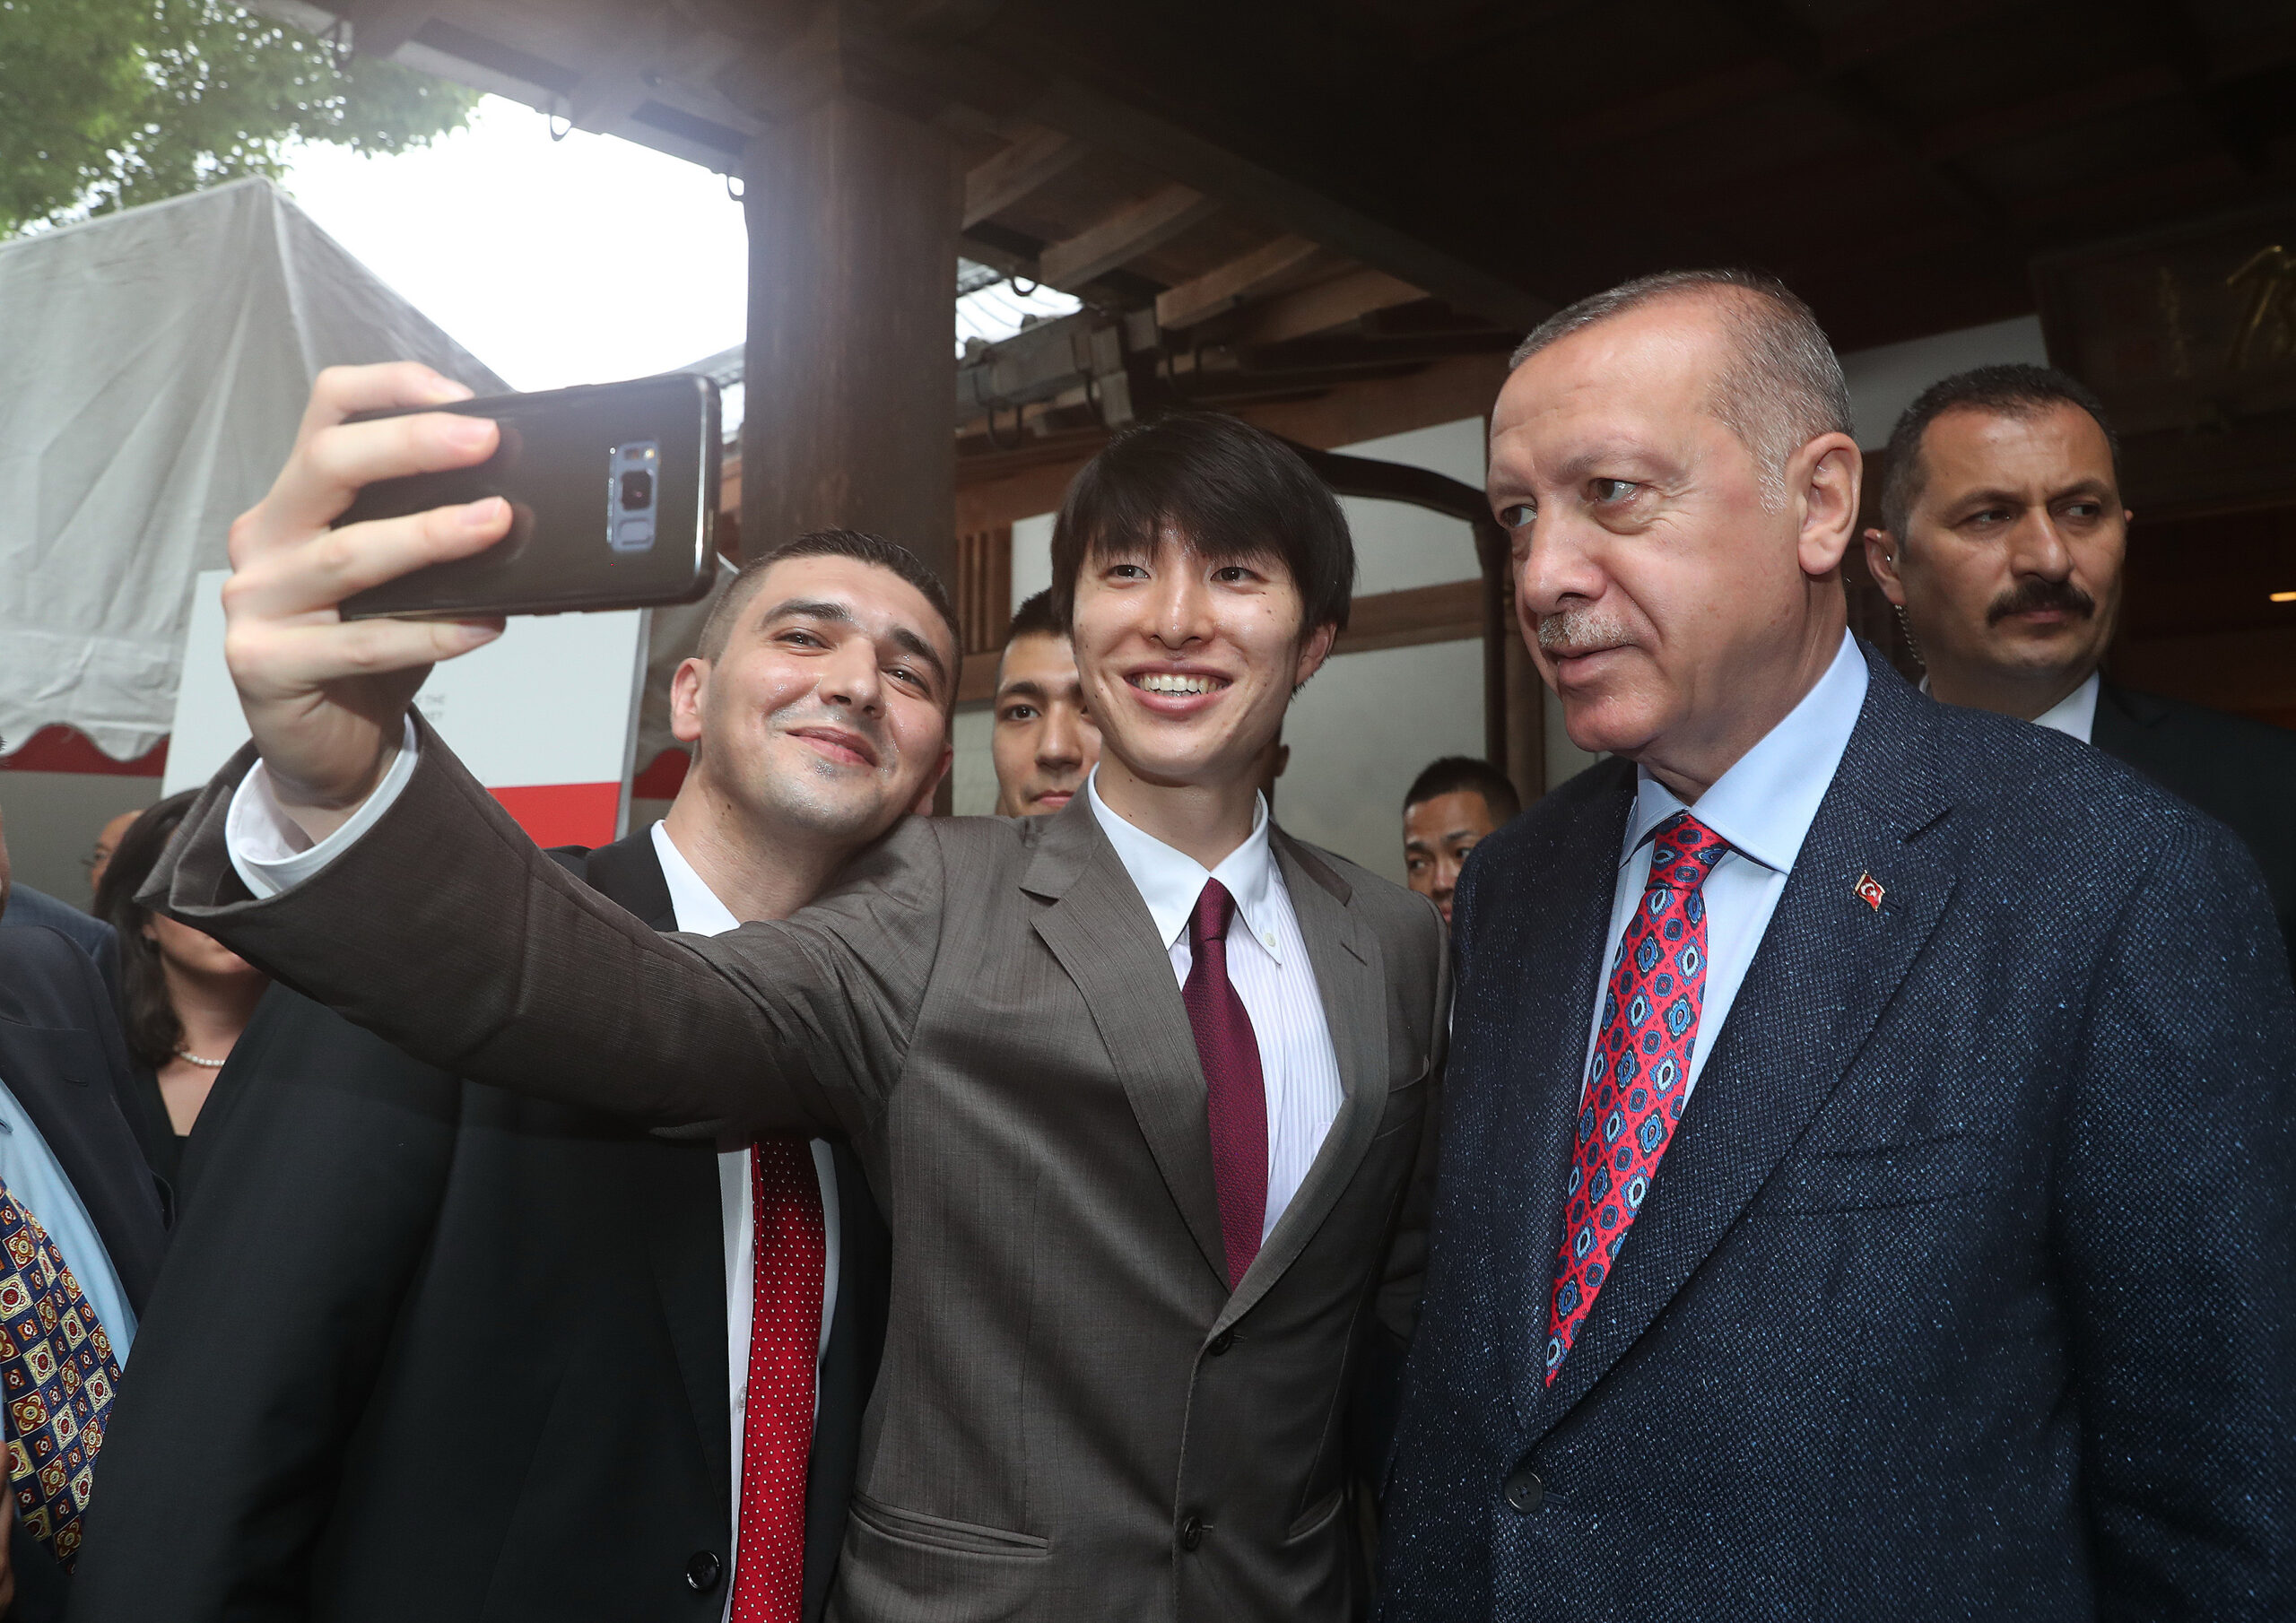 Suleyman pictured with President Erdogan